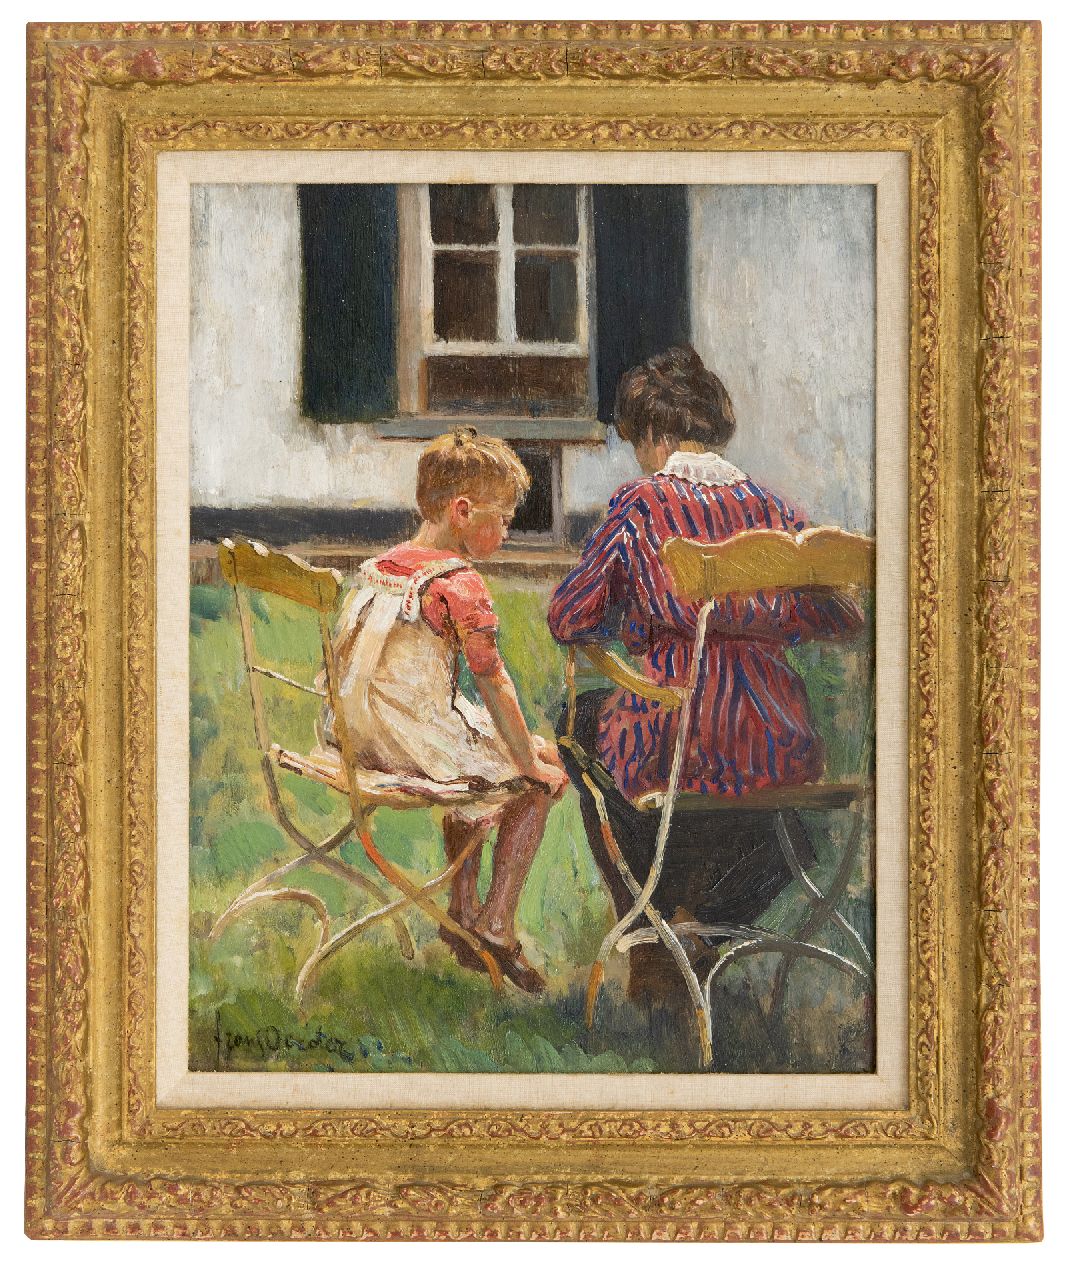 Oerder F.D.  | 'Frans' David Oerder, Mother and daughter in the garden, oil on panel 37.1 x 28.5 cm, signed l.l.